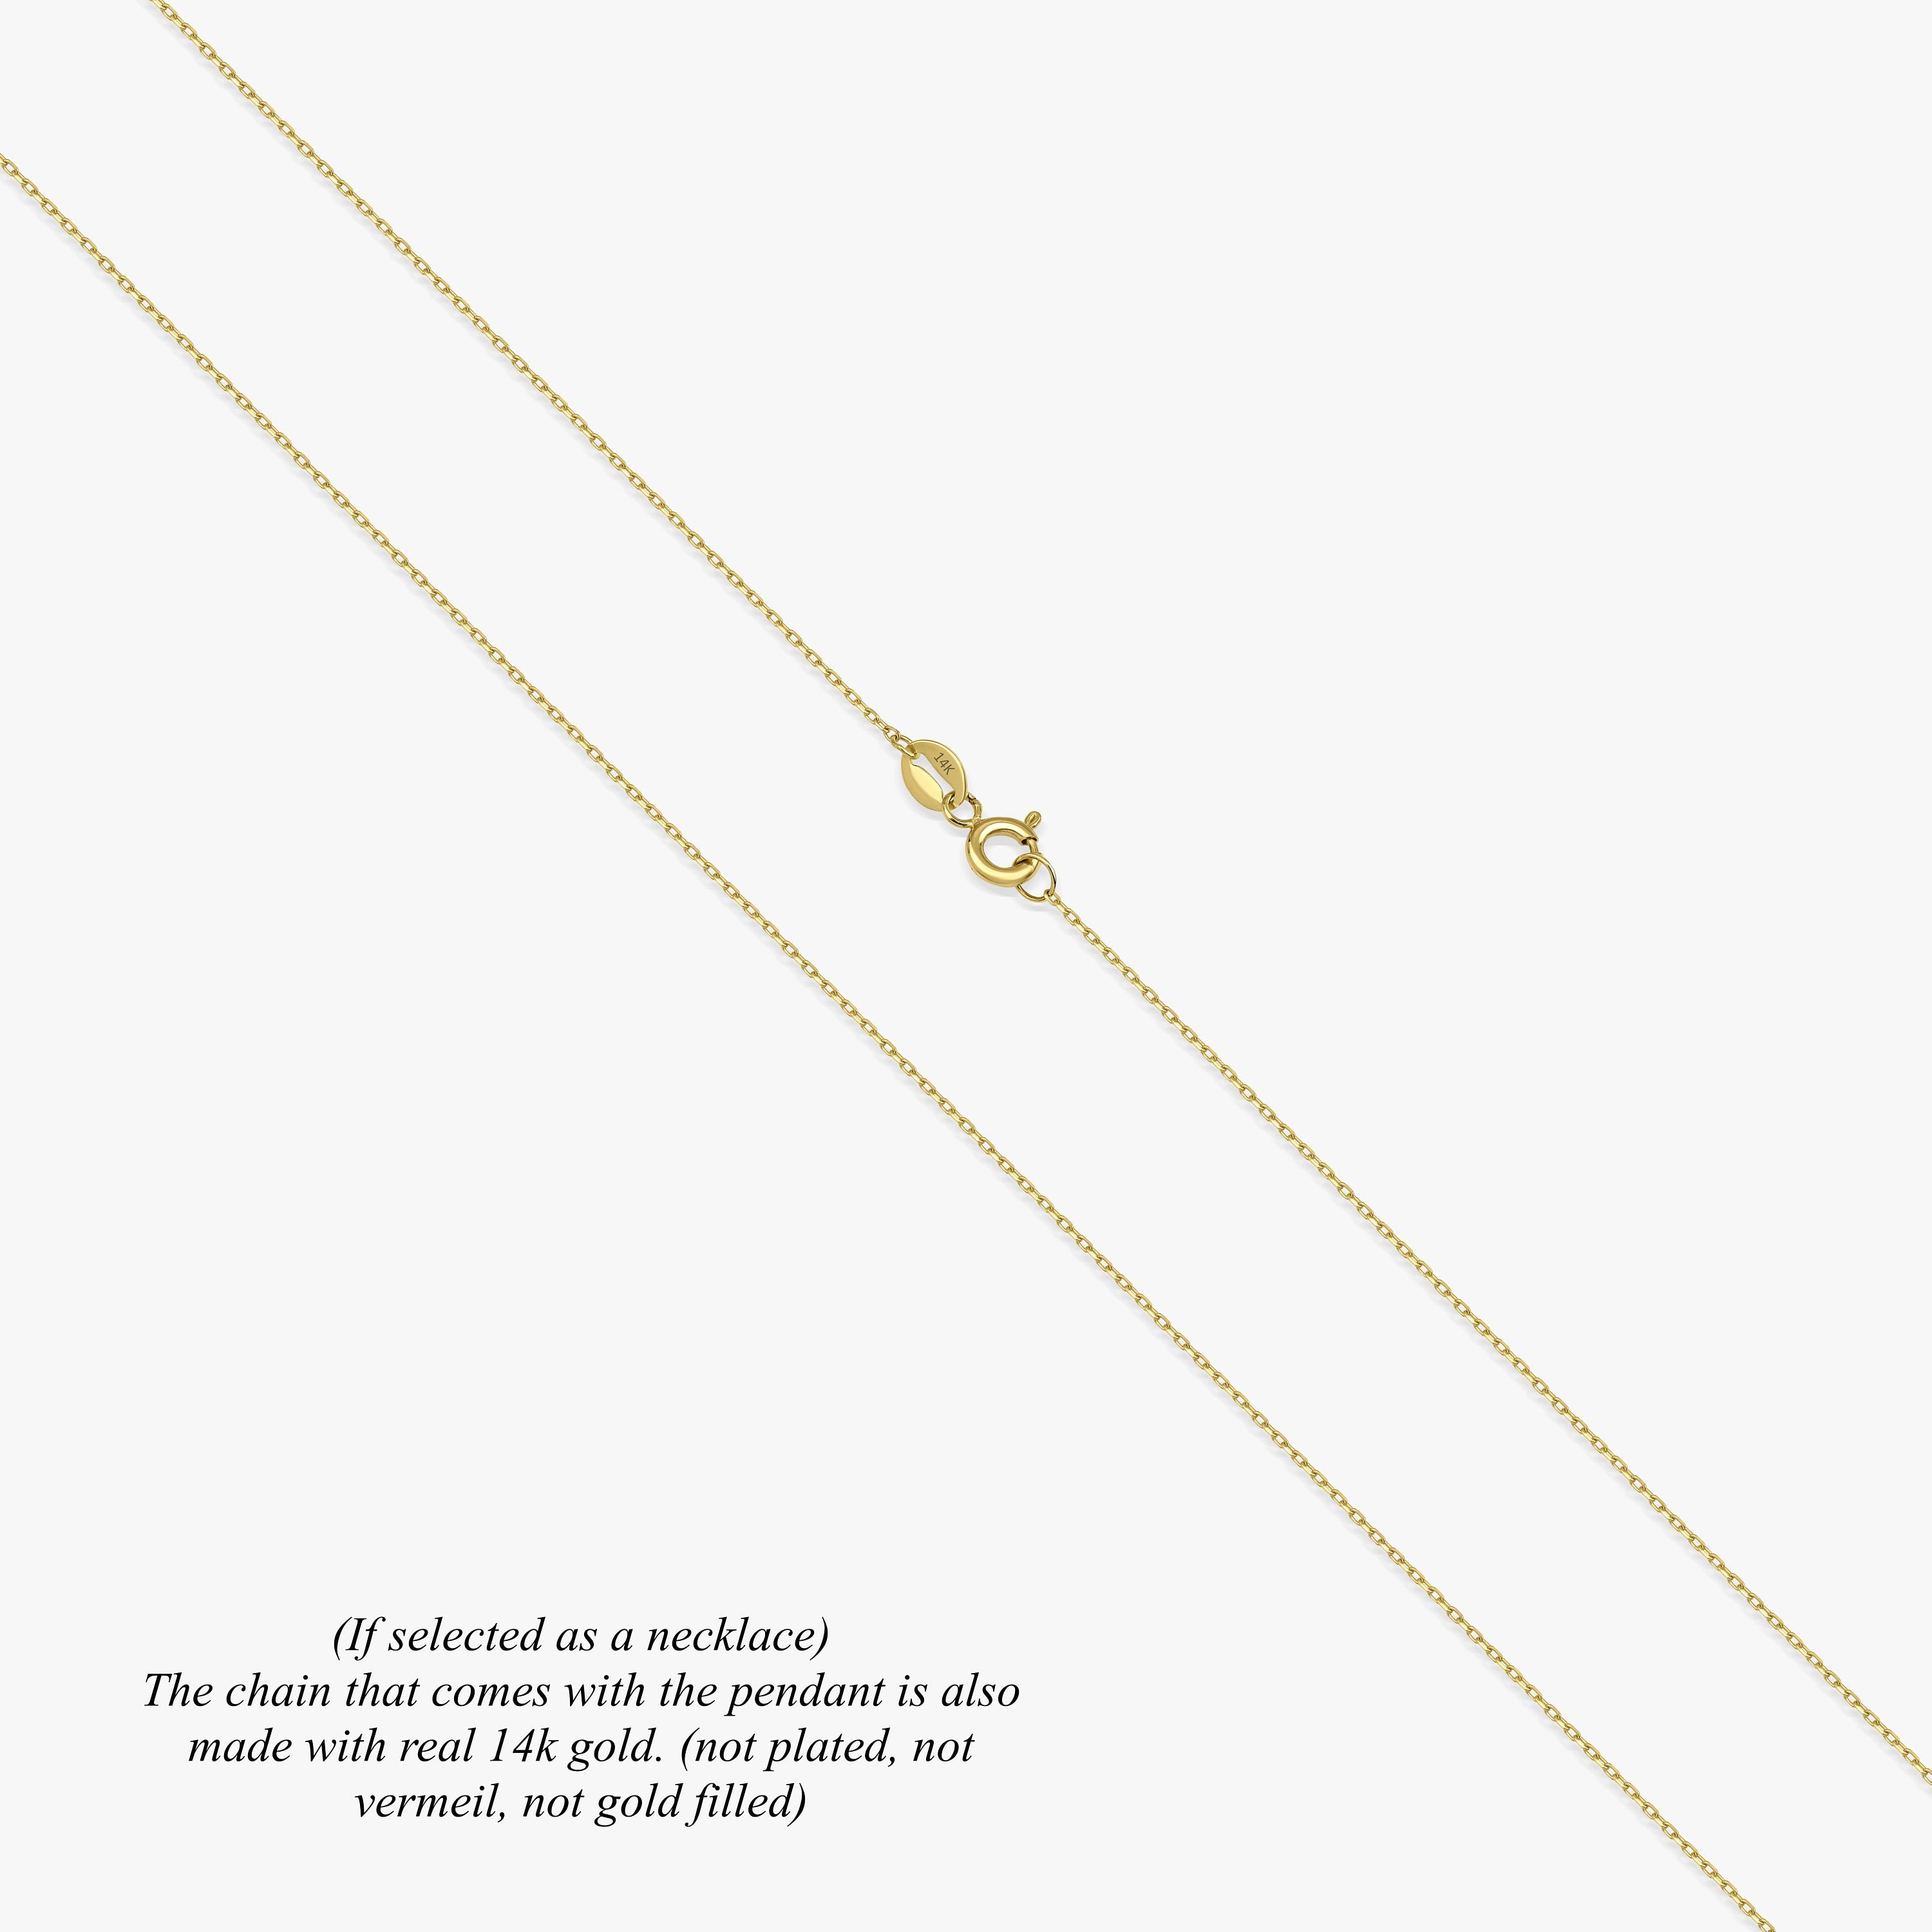 14K Gold Dragonfly Pendant Necklace